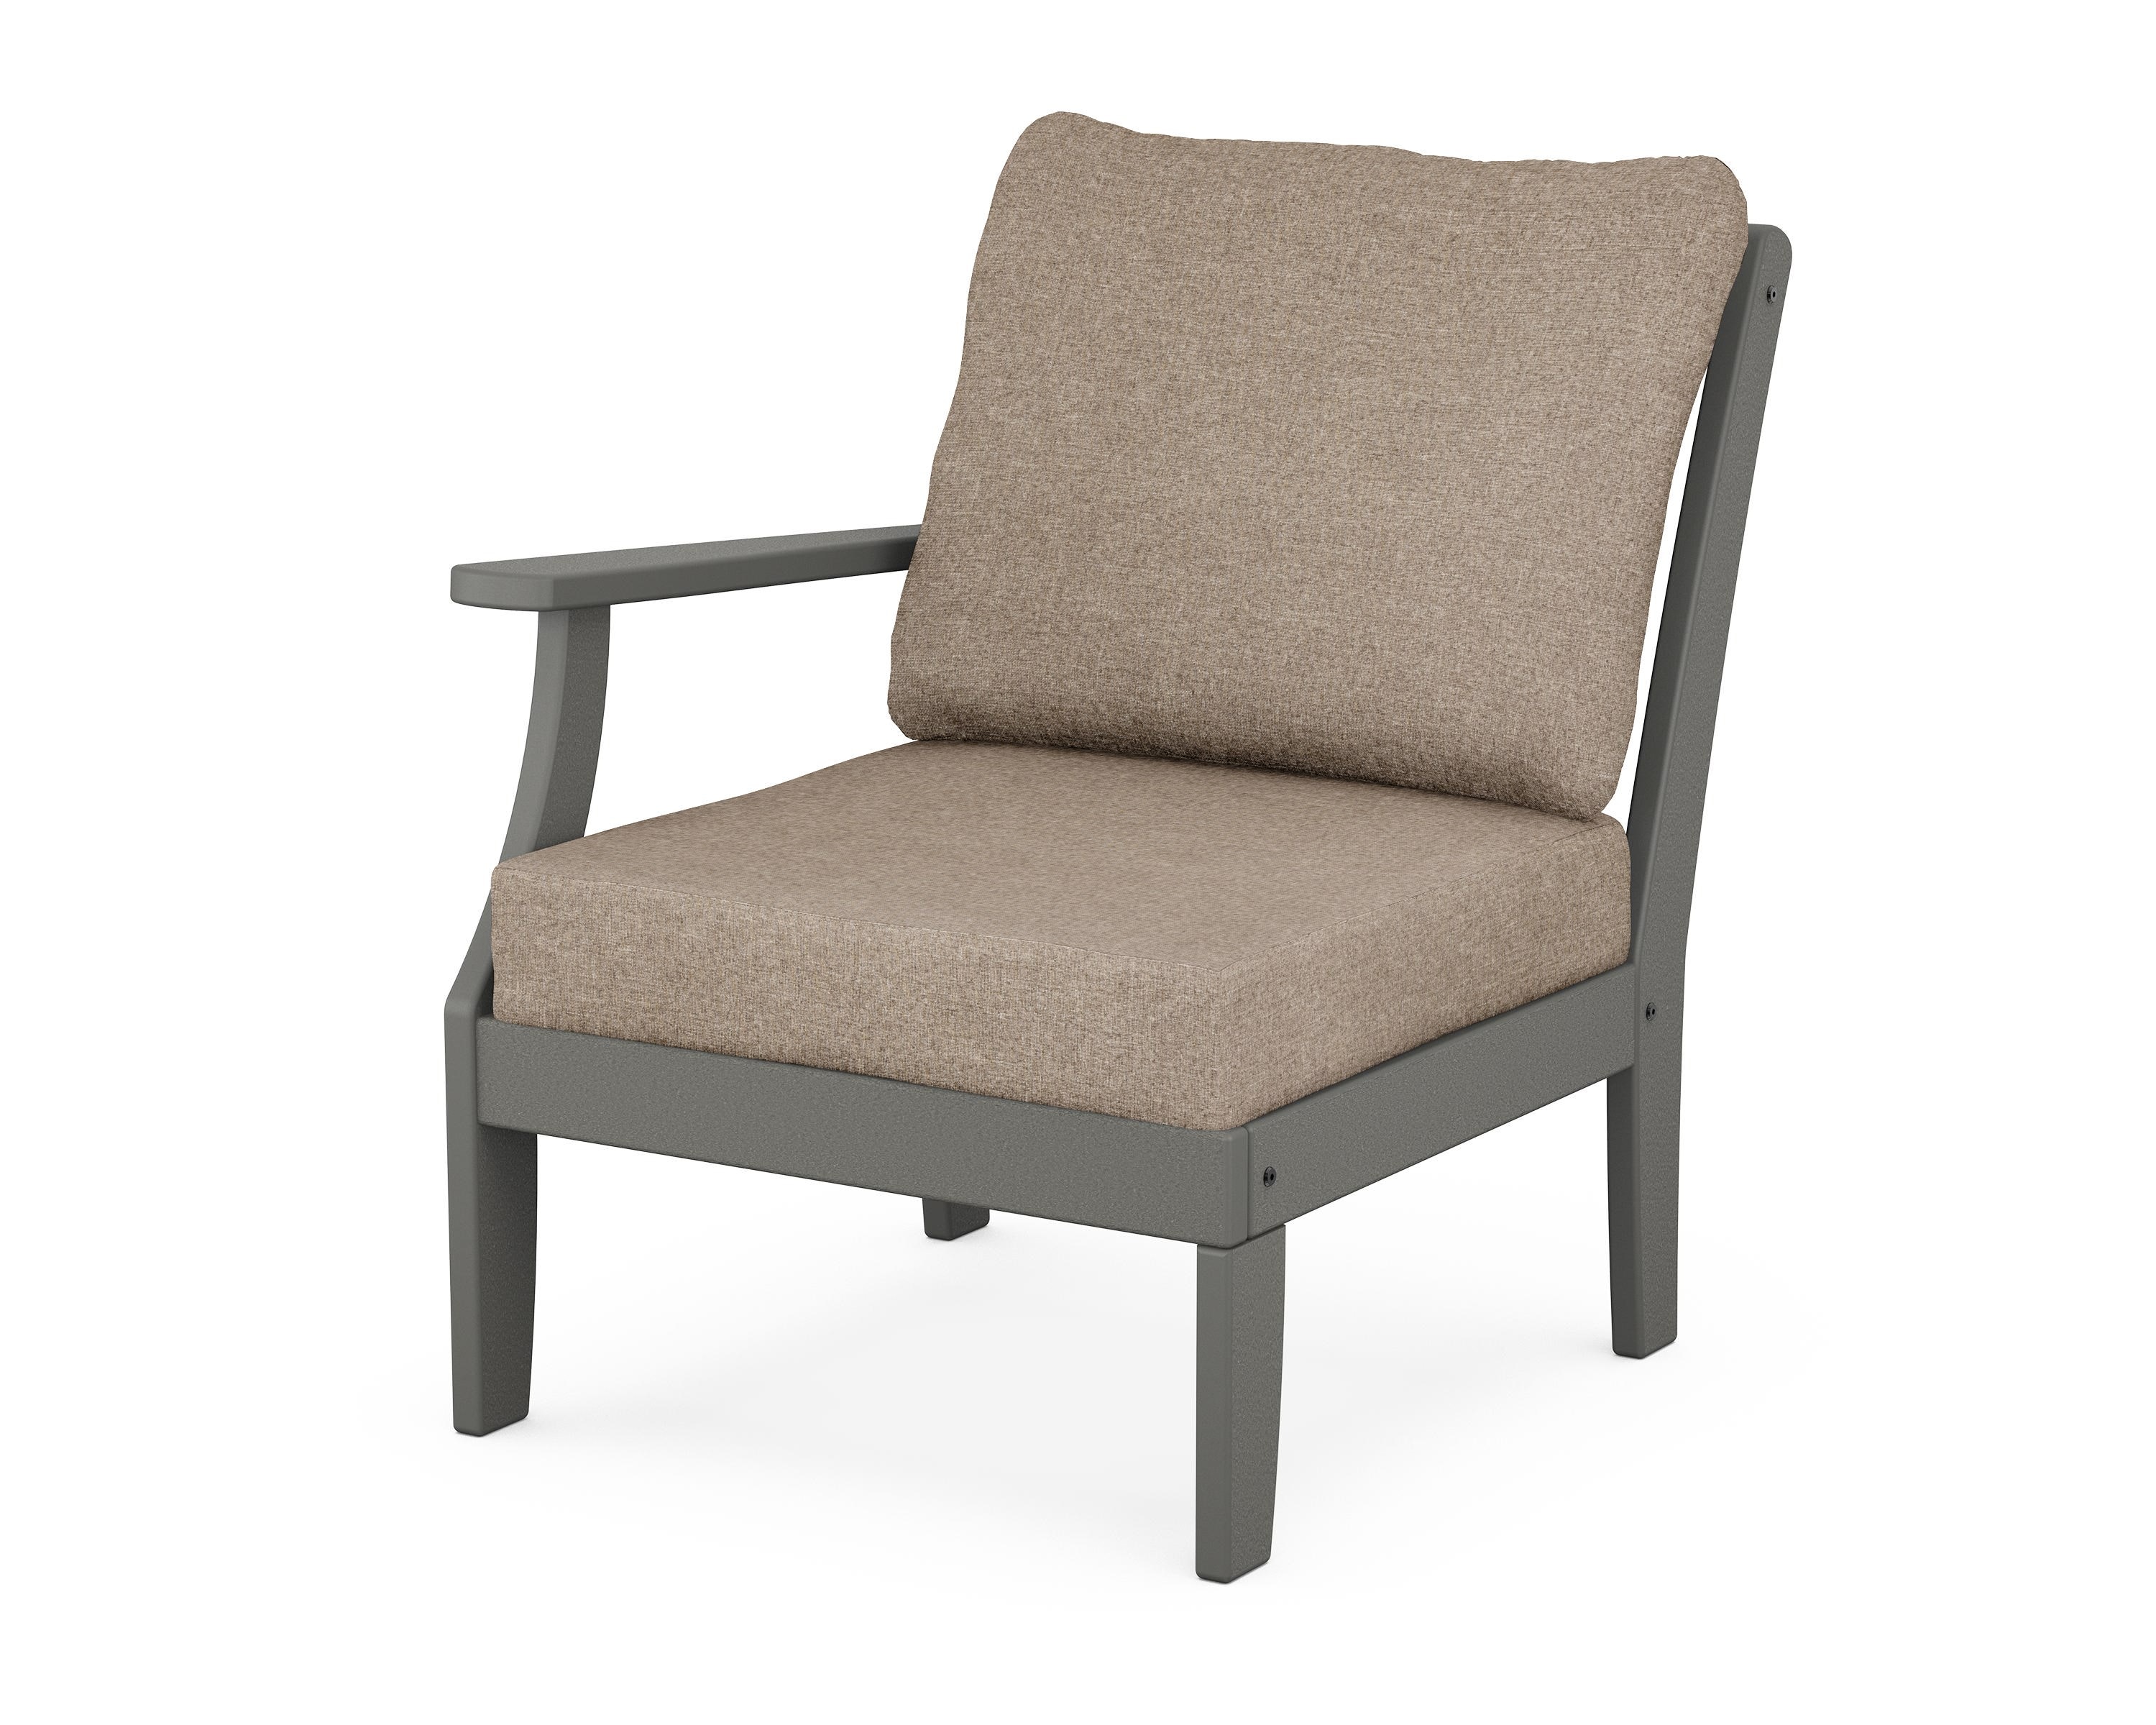 Trex Outdoor Furniture Yacht Club Modular Left Arm Chair